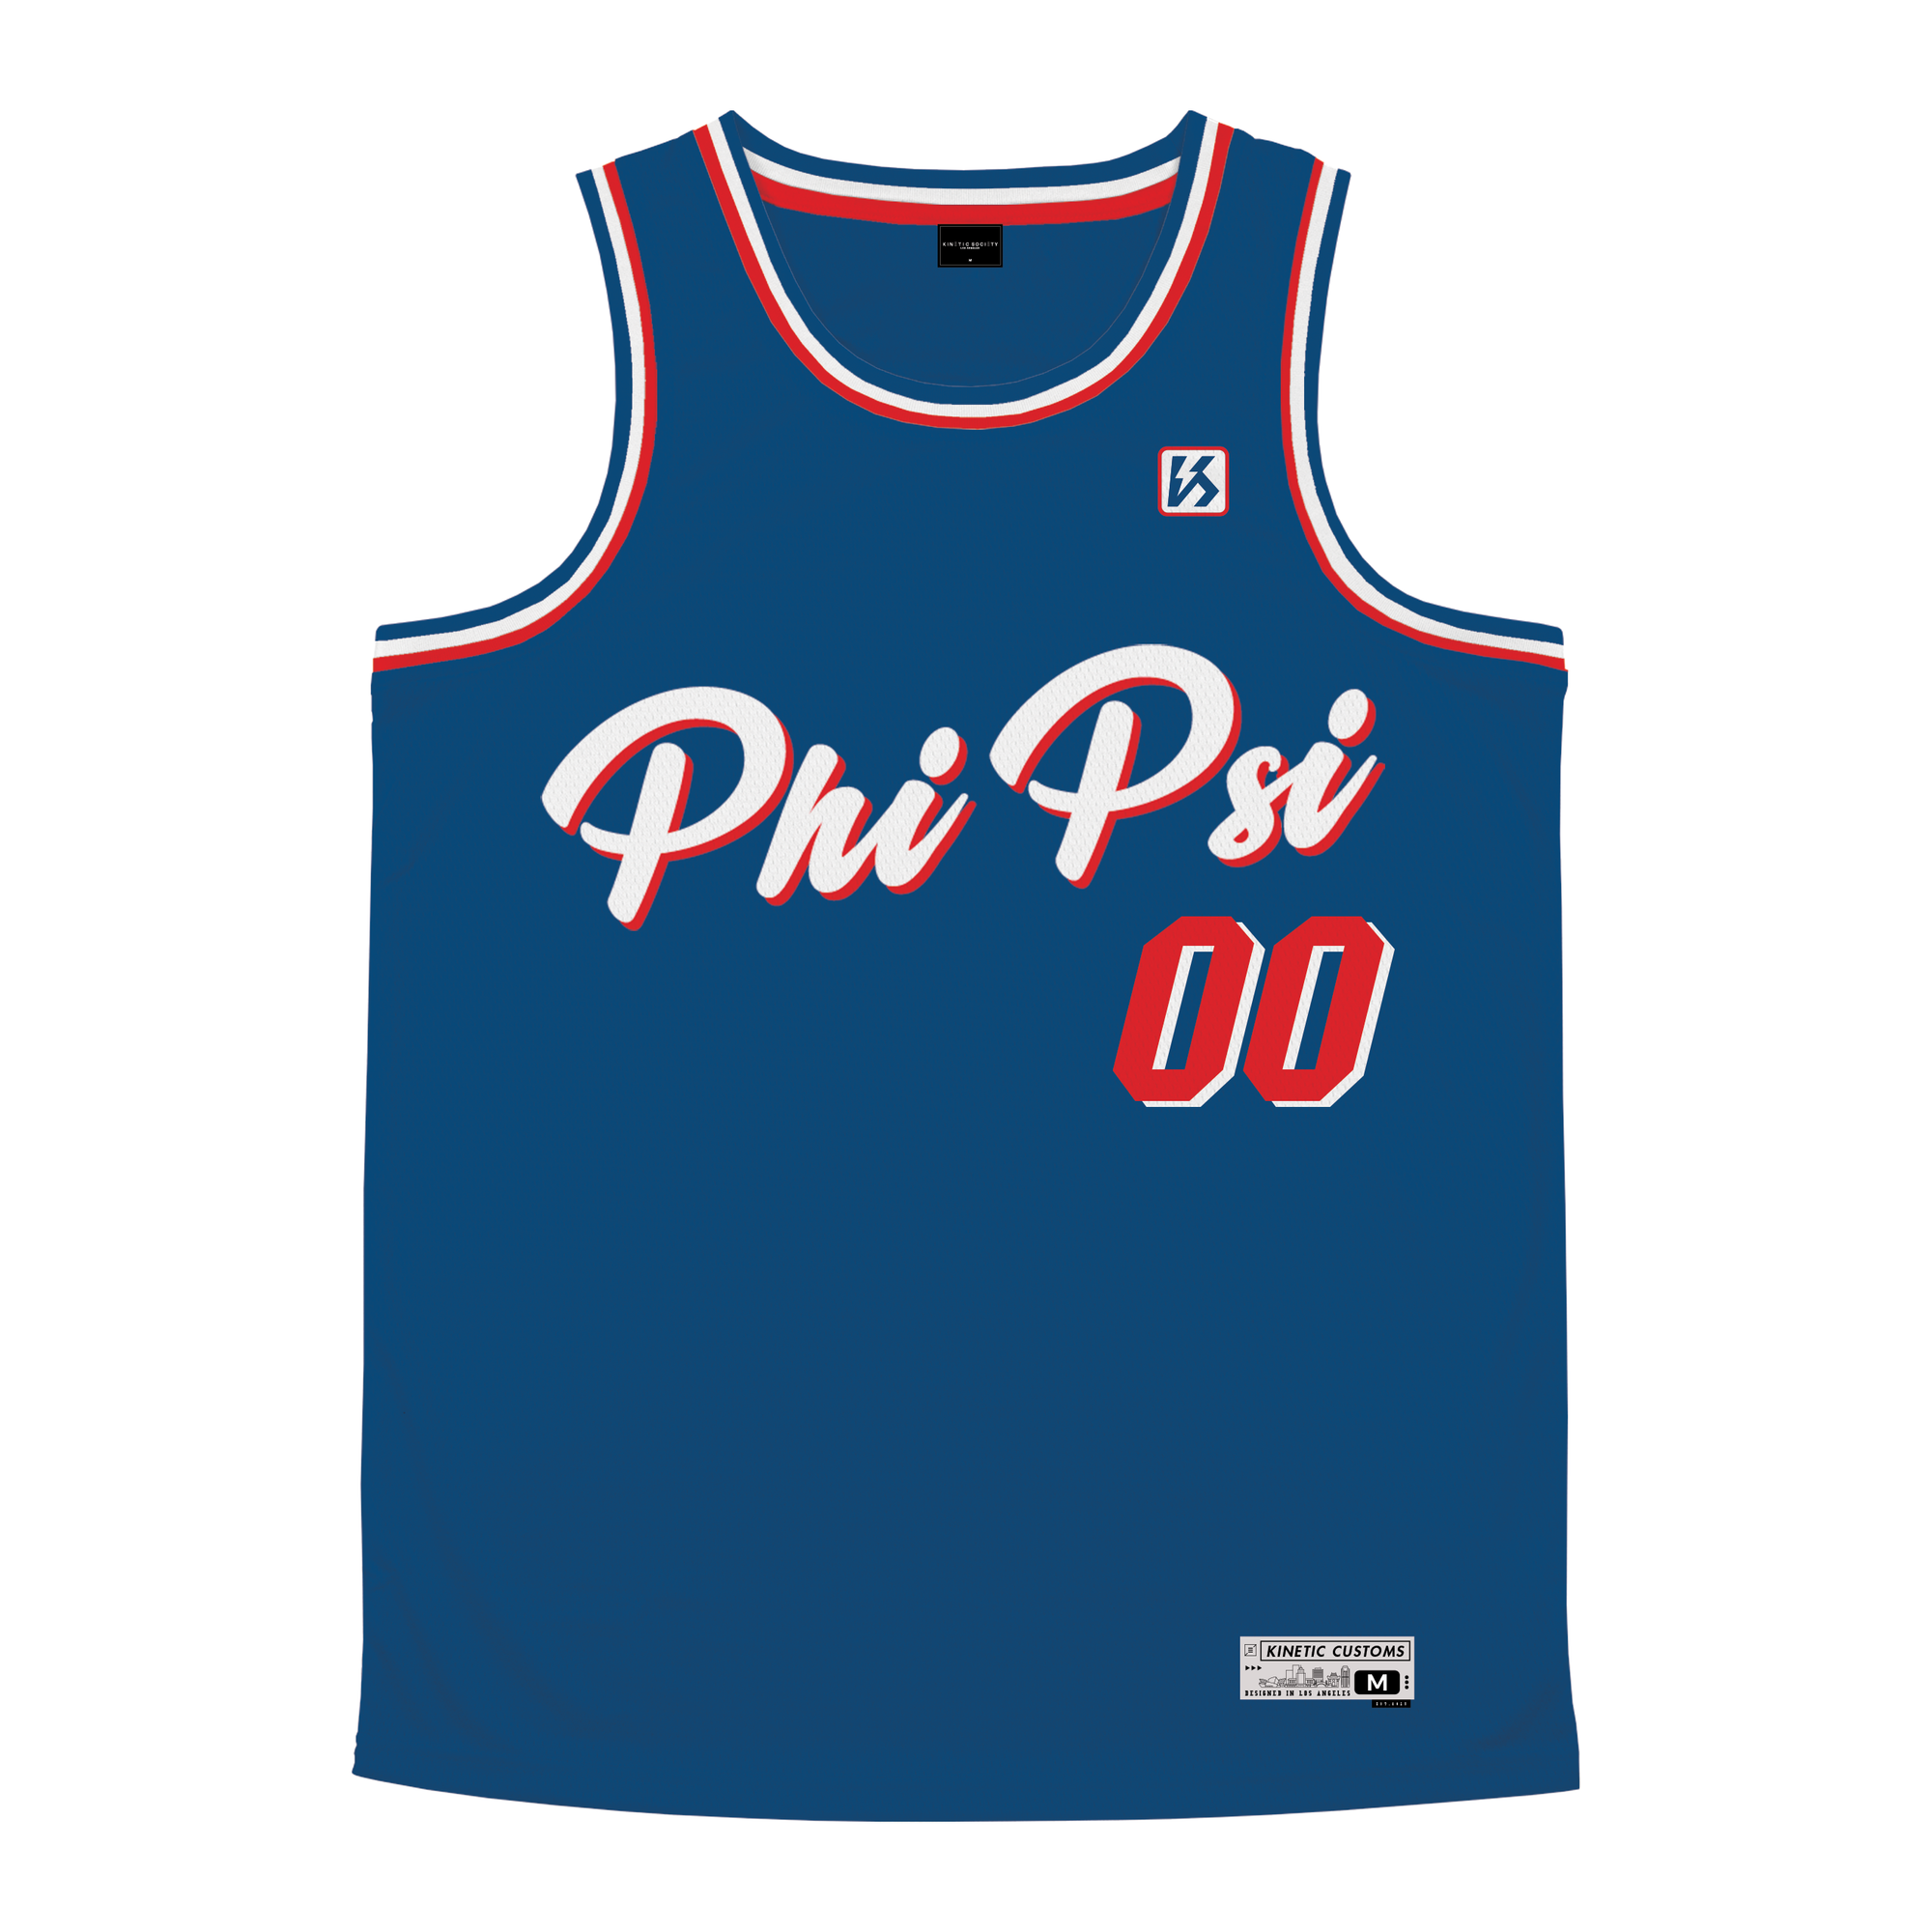 Phi Kappa Psi - The Dream Basketball Jersey